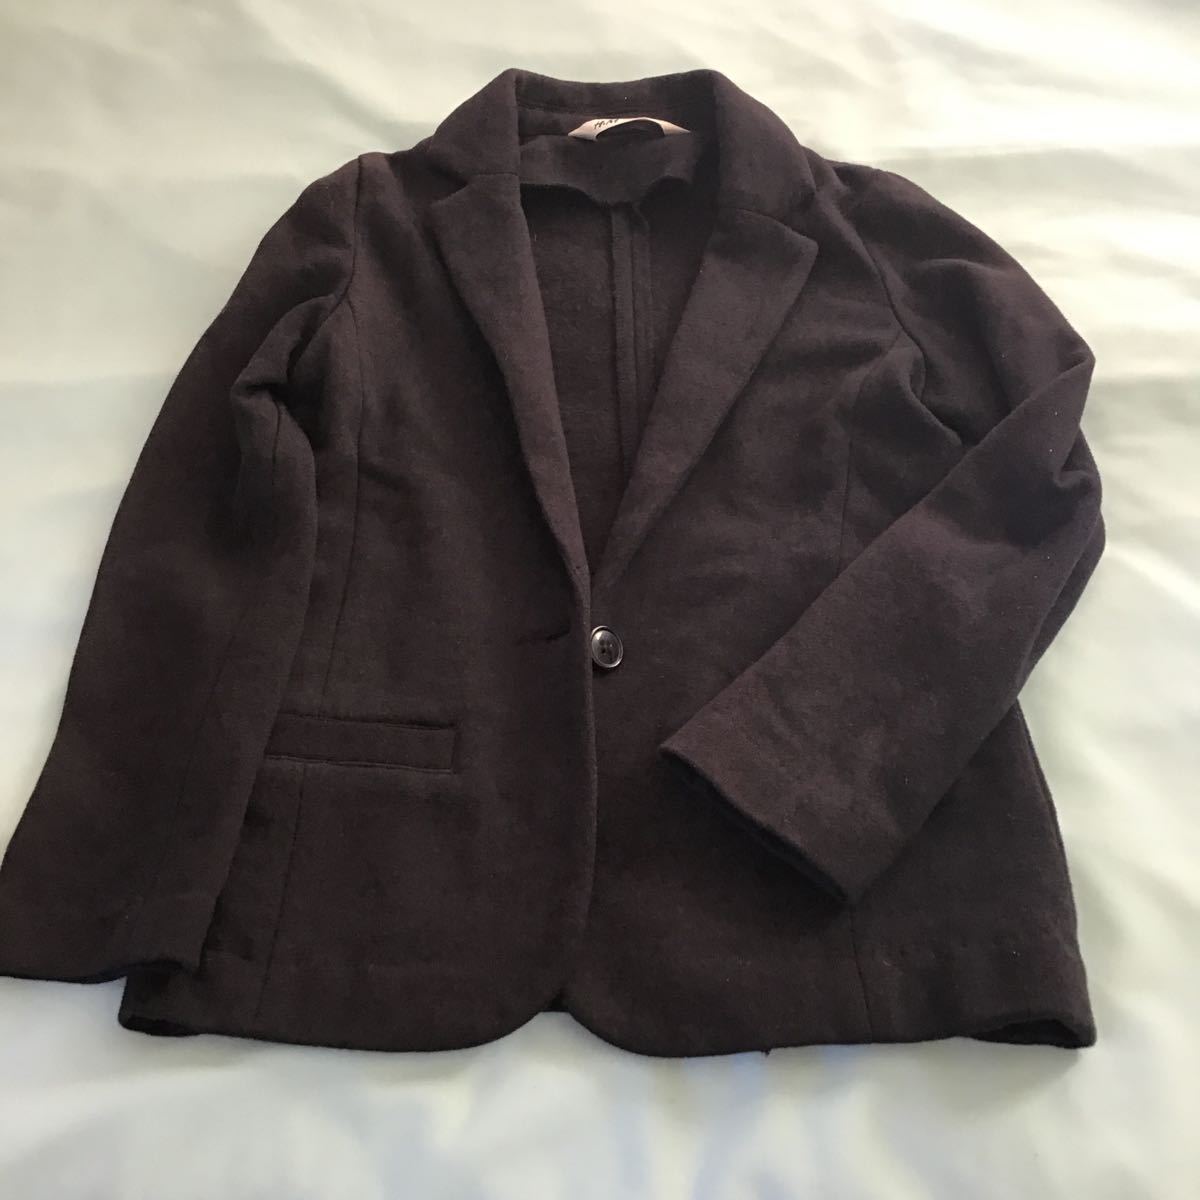  tailored jacket H&M blaser dark blue 8,9 -years old for 